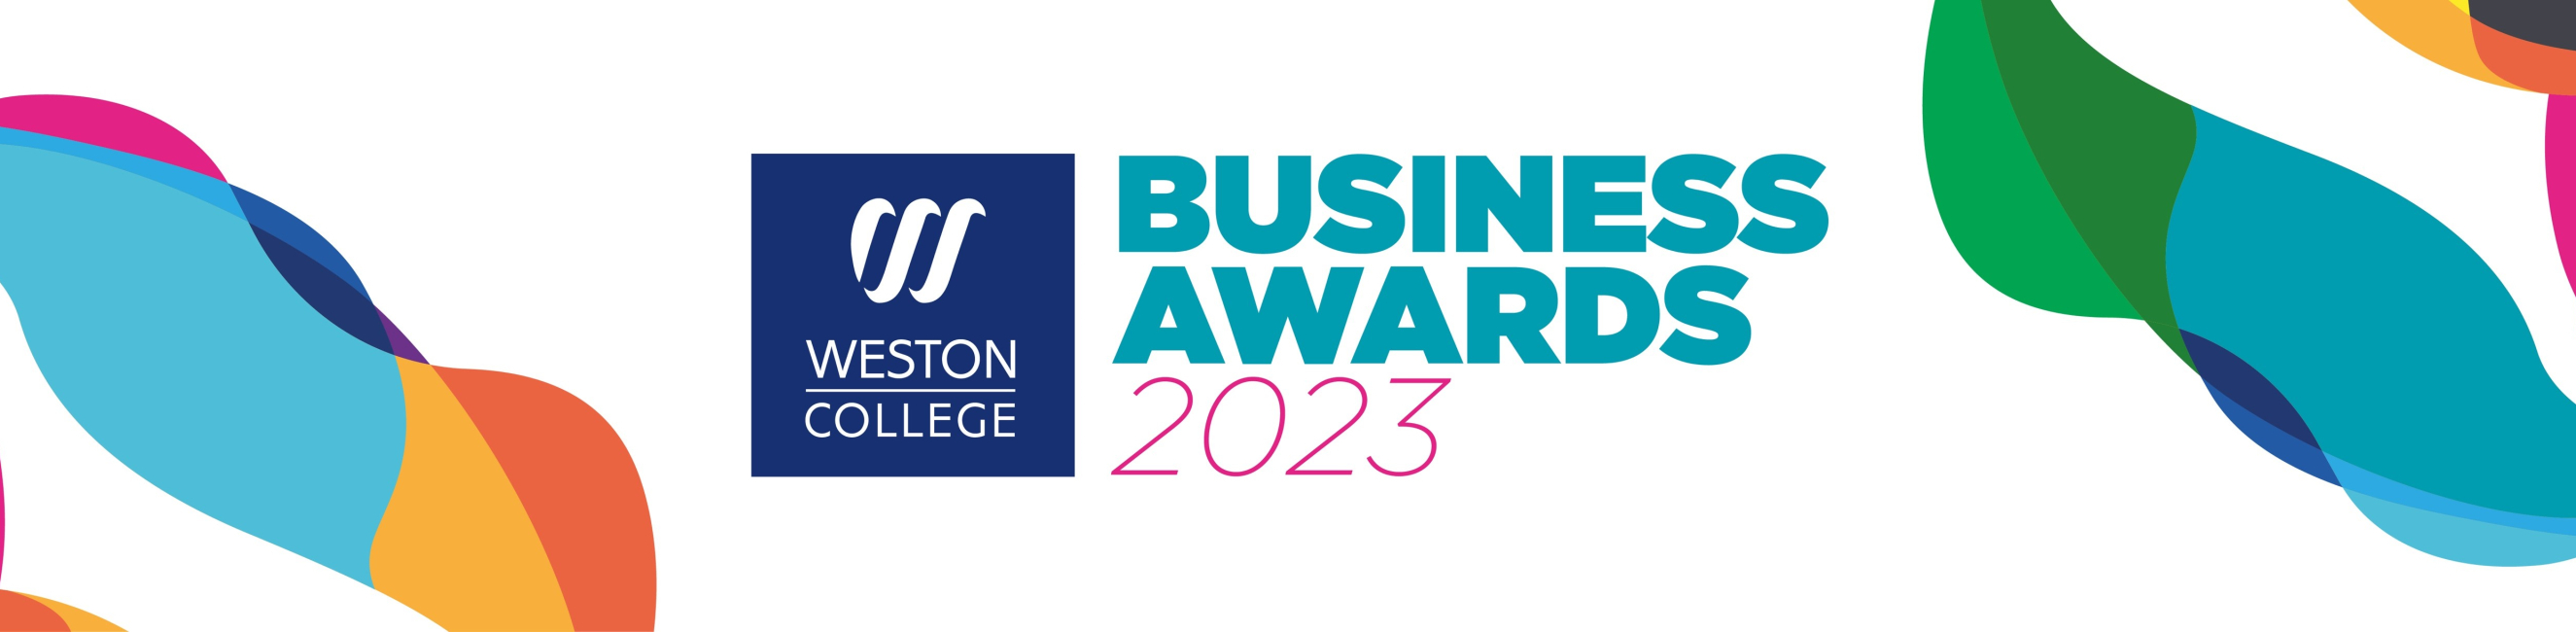 Weston College Business Awards 2023 logo